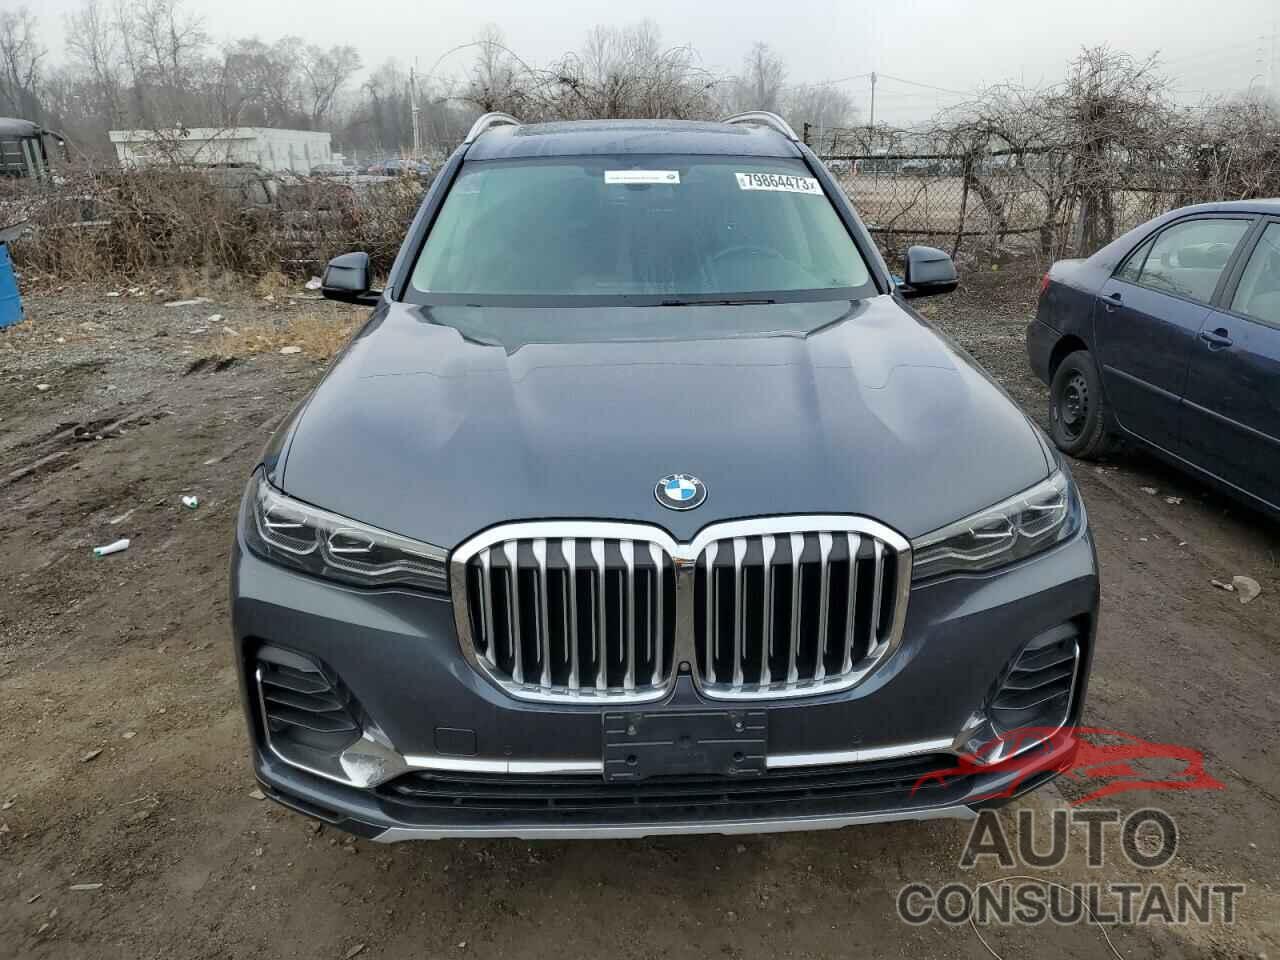 BMW X7 2021 - 5UXCW2C02M9D95174